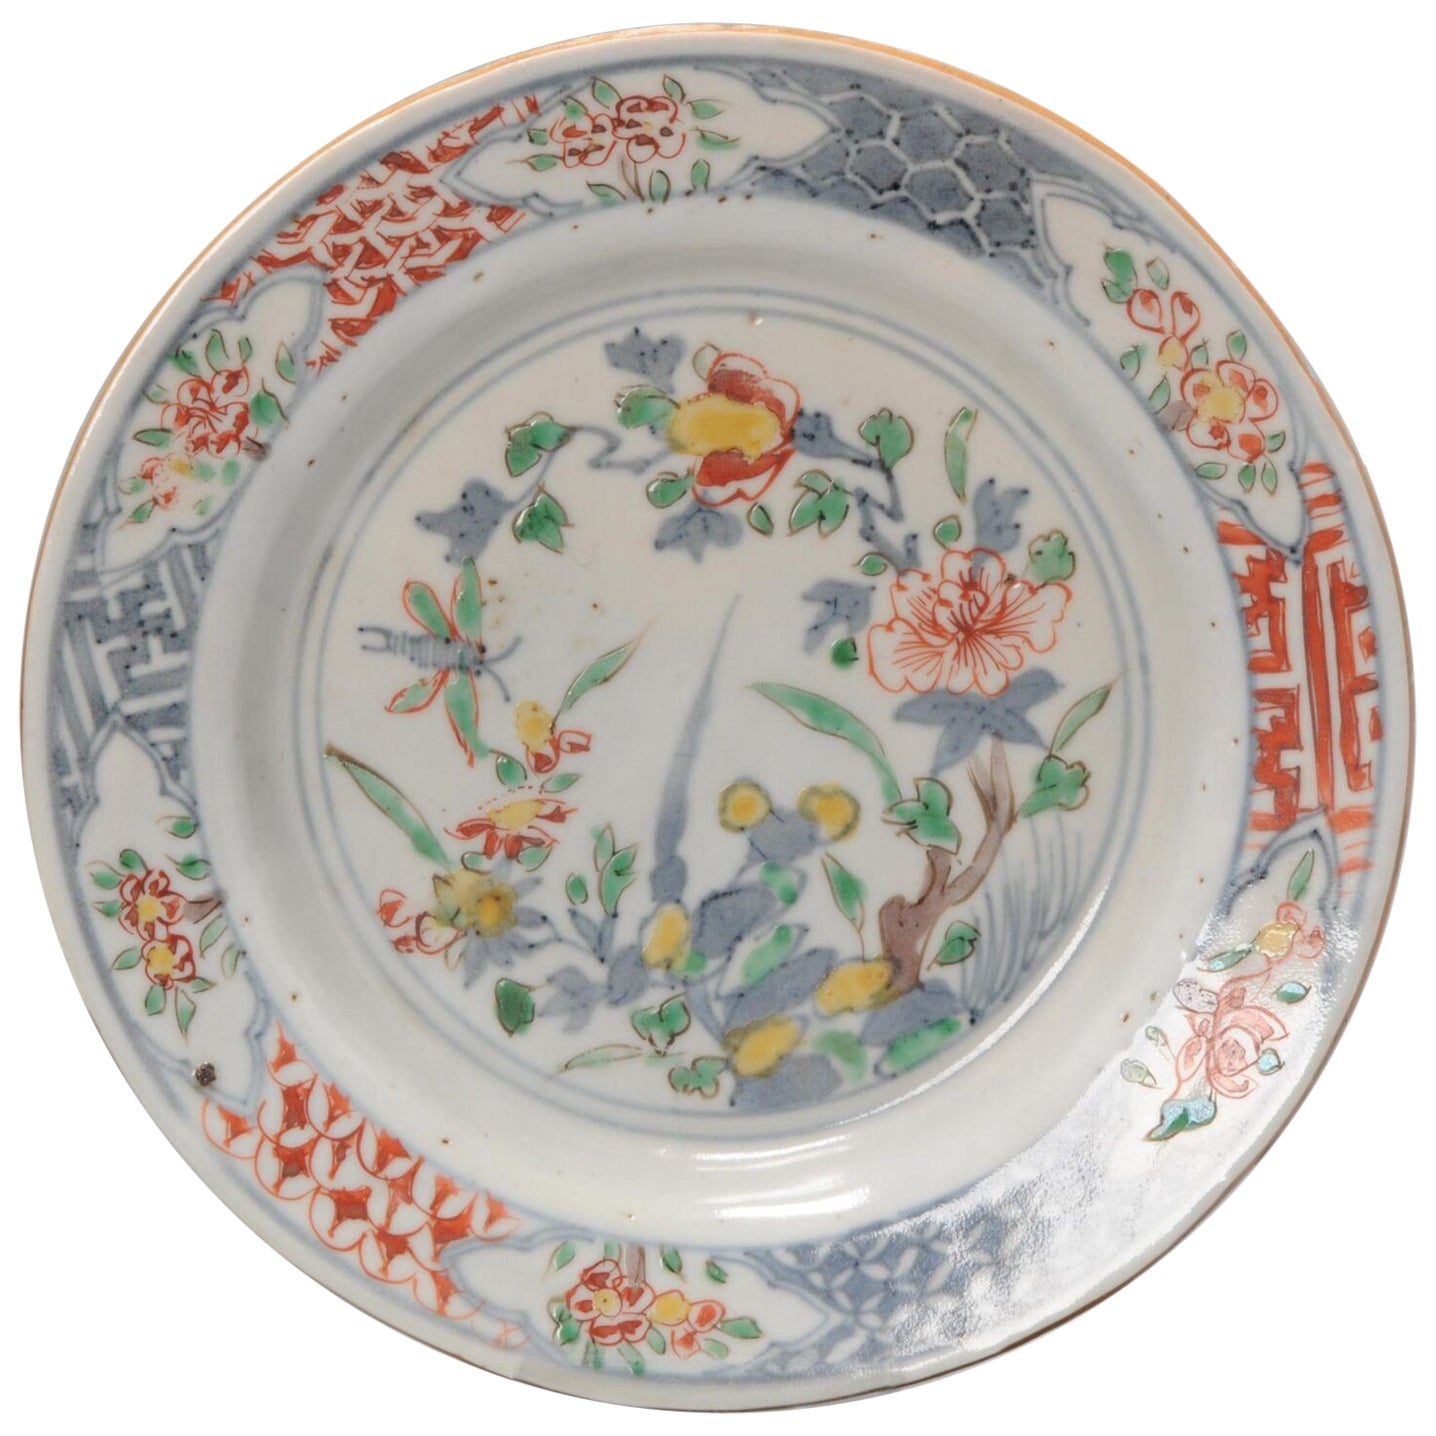 Rare Chinese Porcelain Ming Period Ko Akae Floral Dish, ca 1600-1660